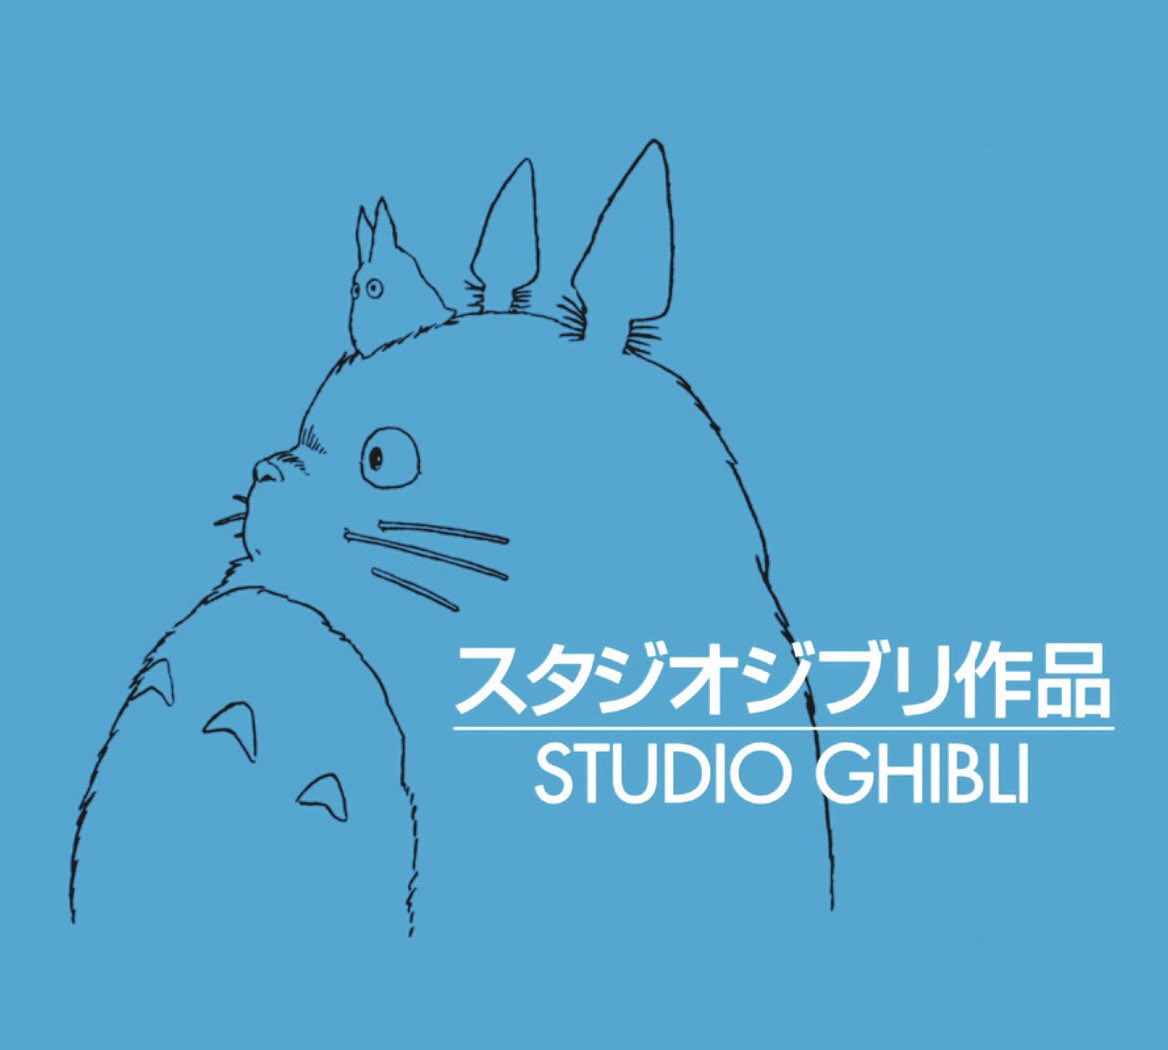 Studio Ghibli / Twitter